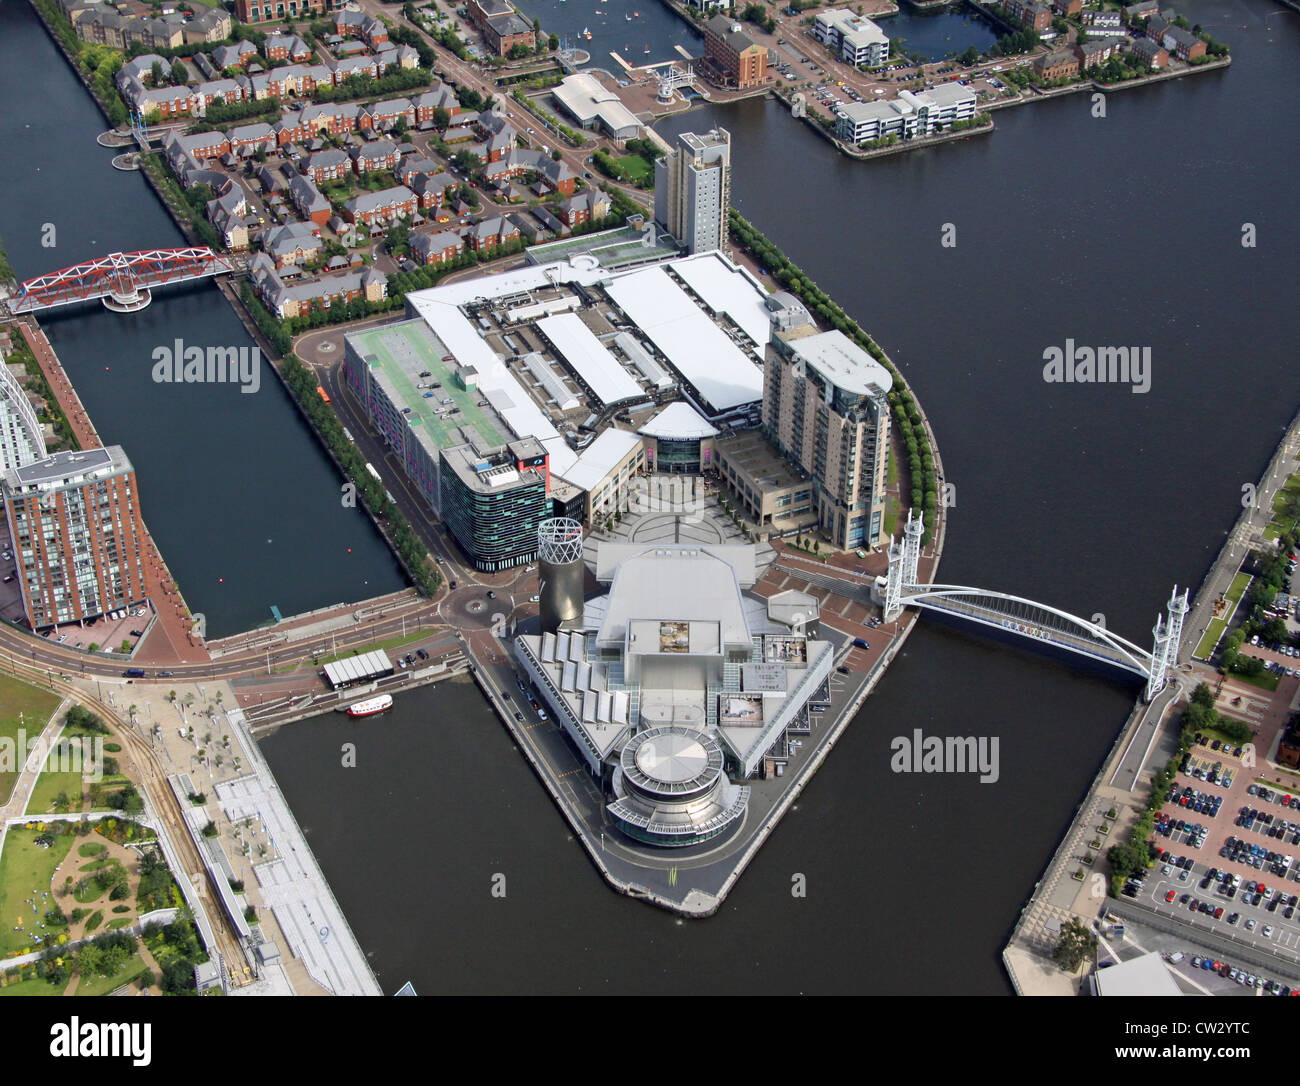 Vista aérea de El Lowry Outlet Mall en Salford, Manchester, Reino Unido Foto de stock